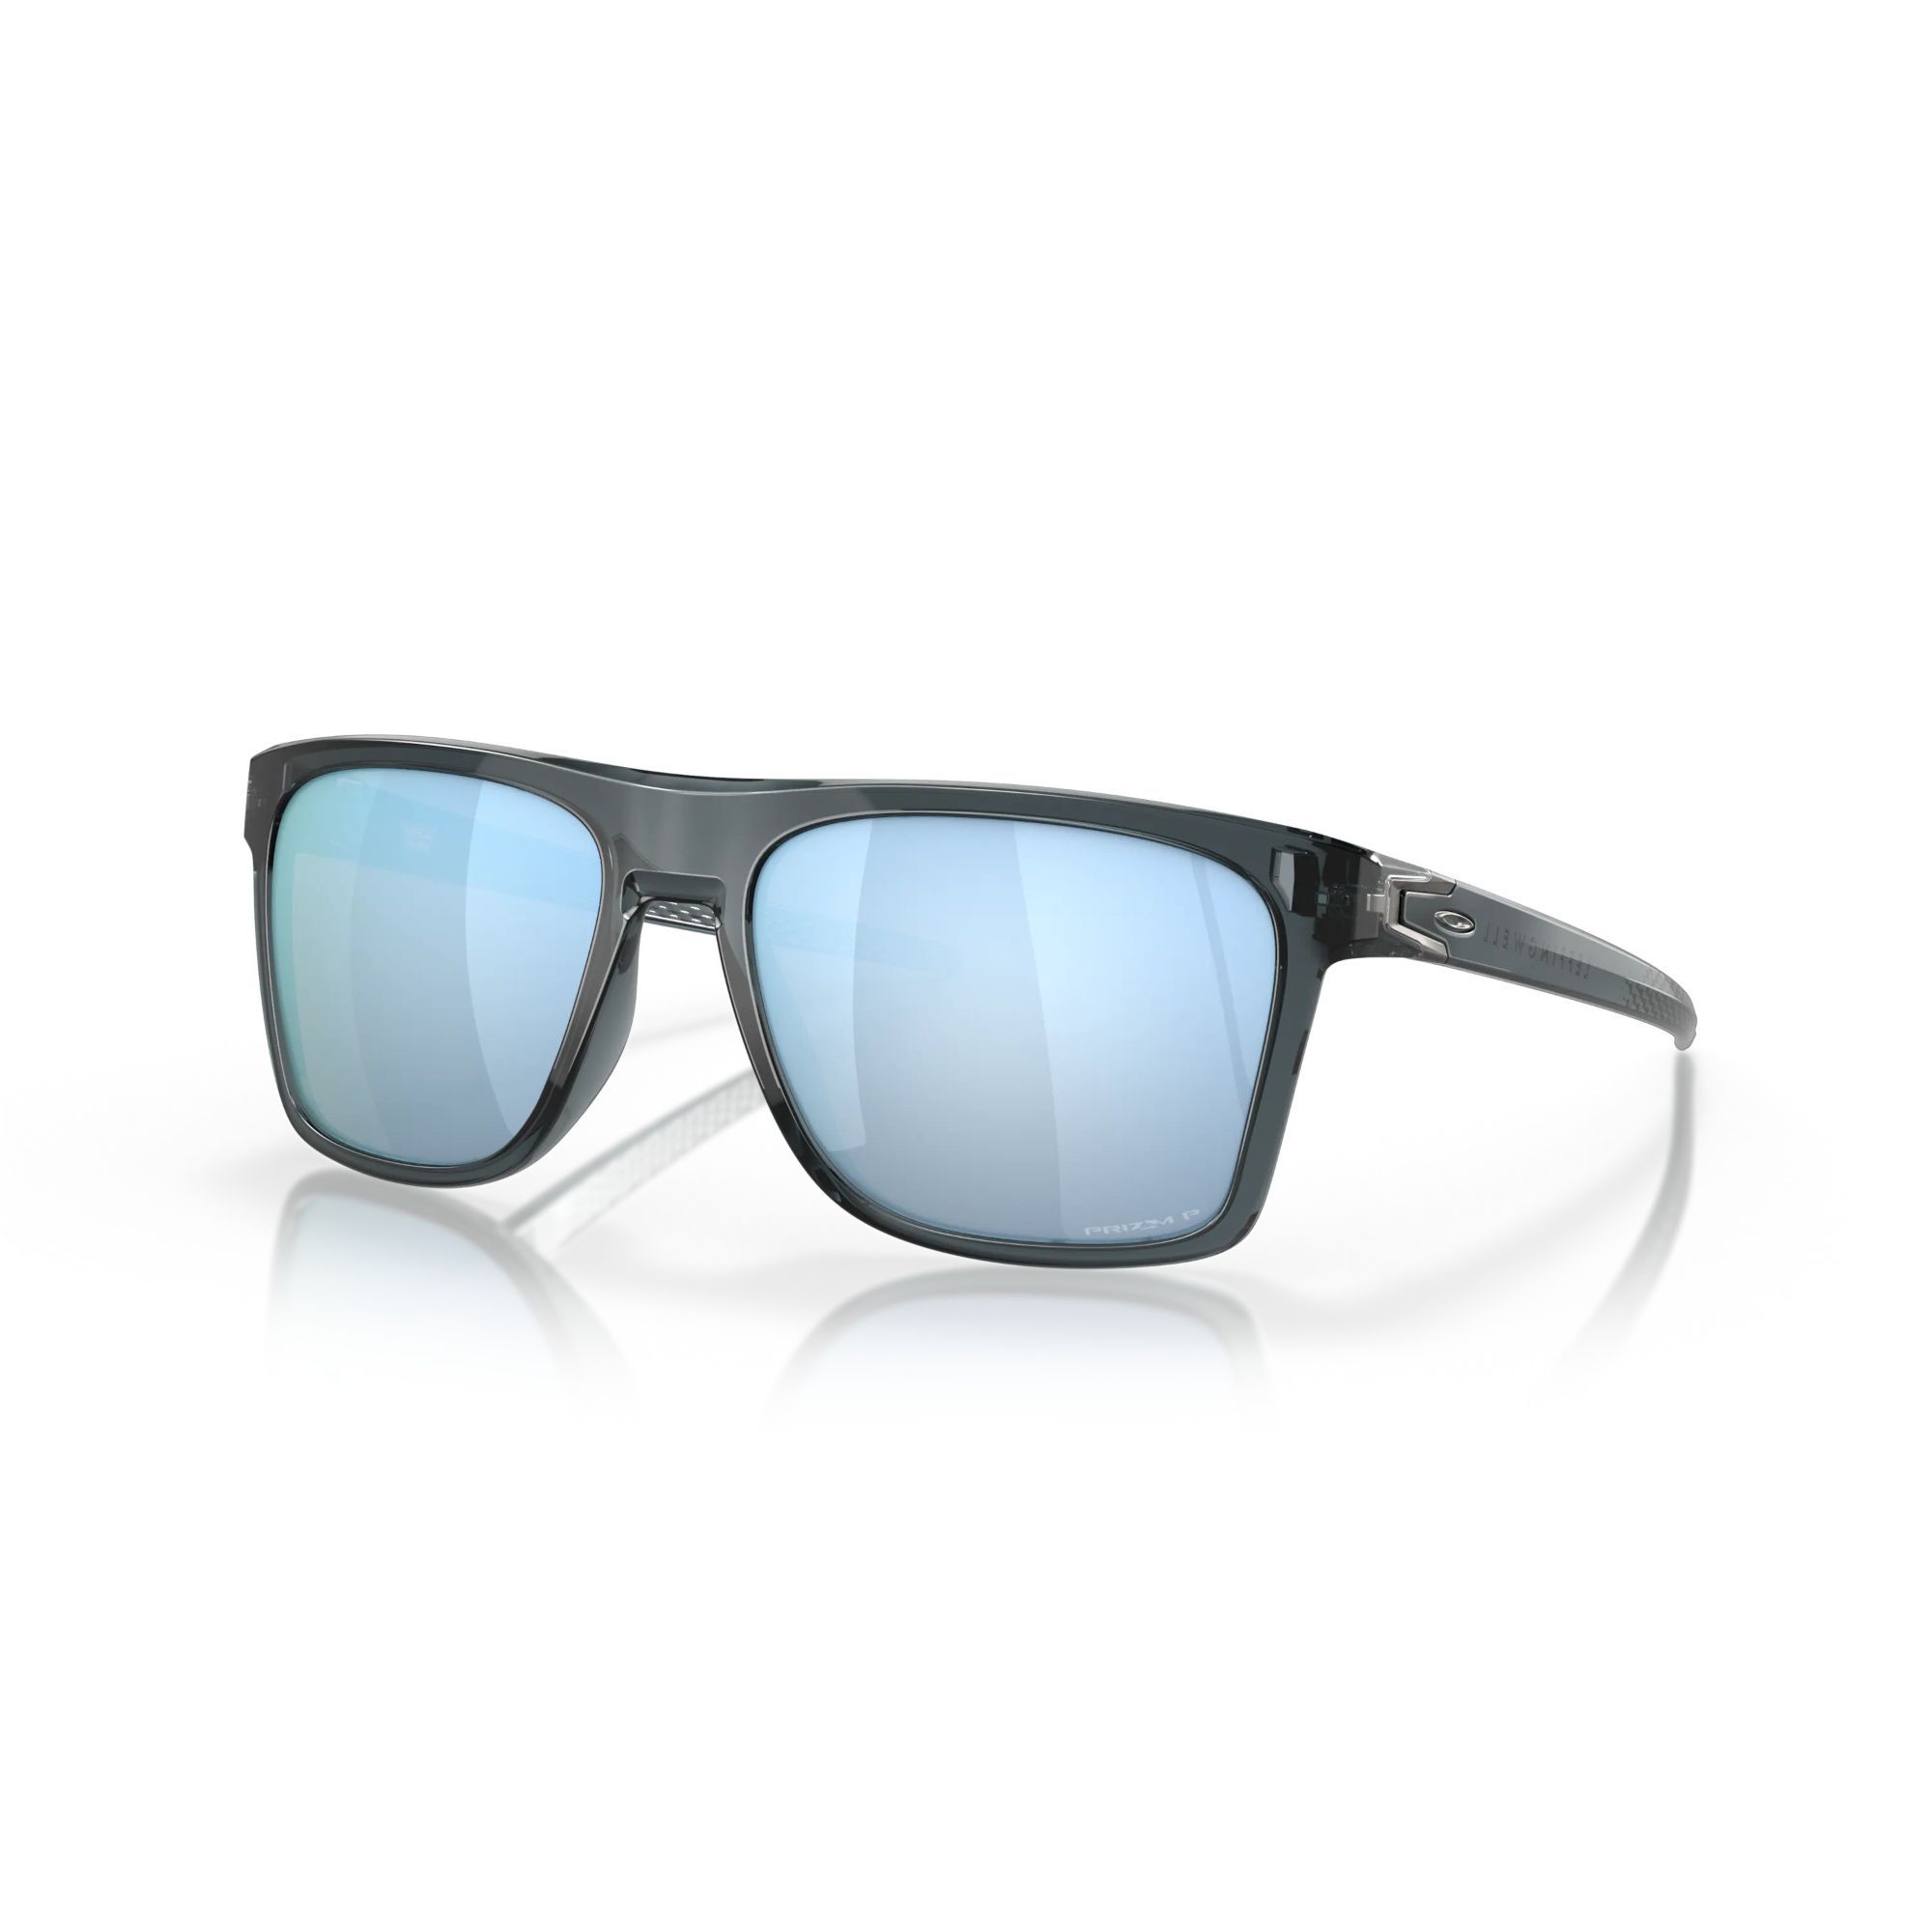 Leffingwell Sunglasses OO9100-05 size 57